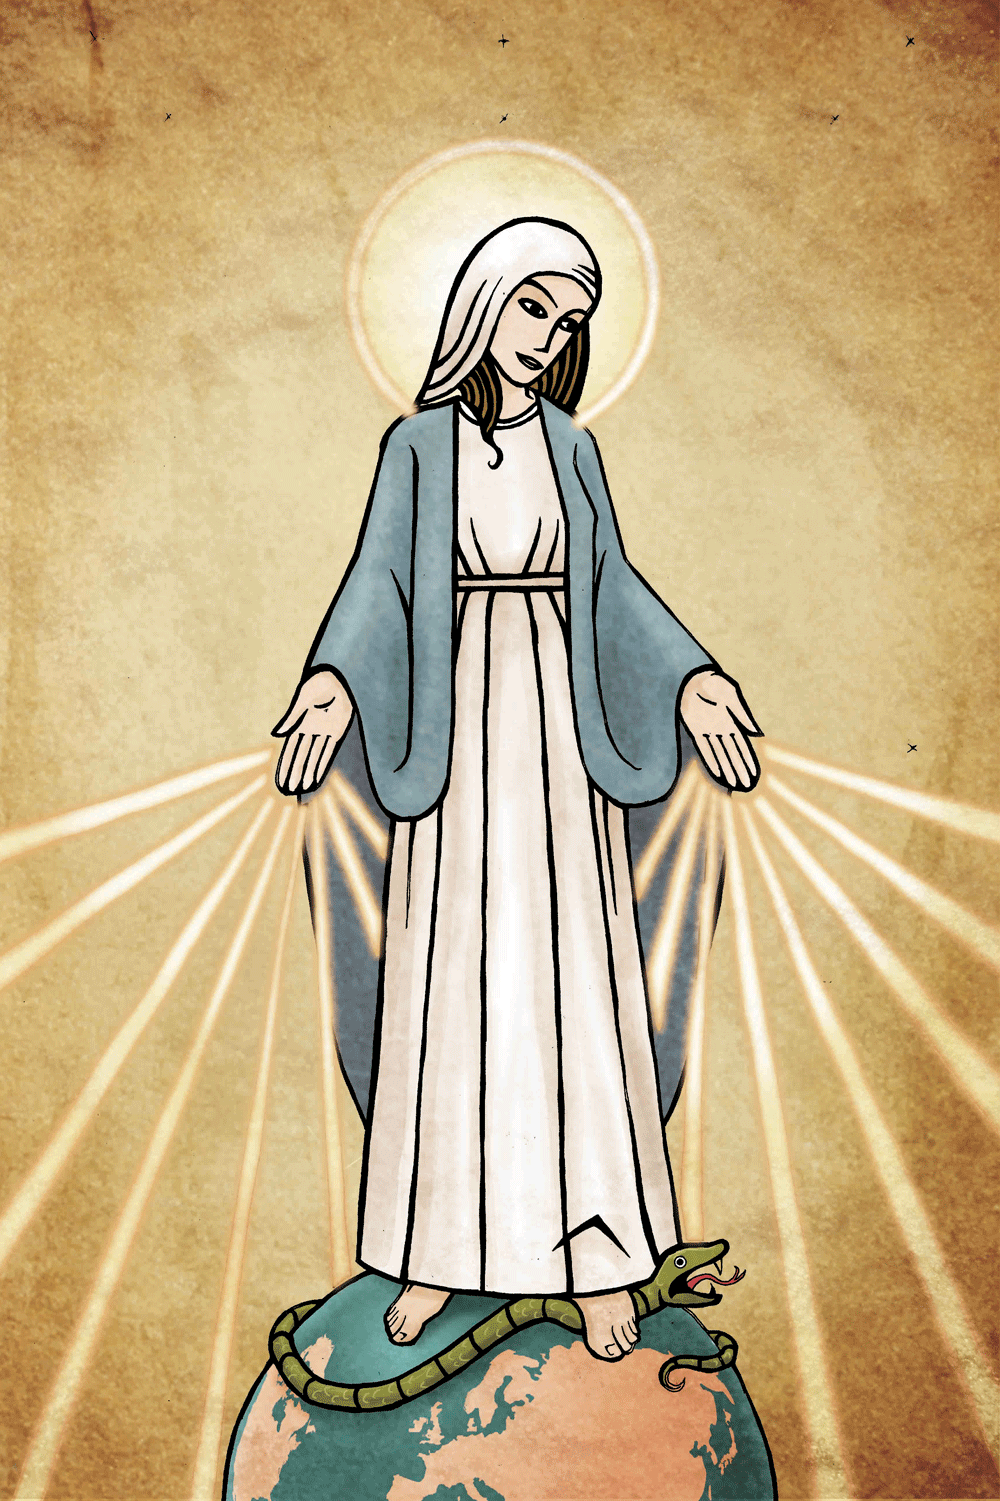 alt="digital colour religious illustration of mary mother of god"